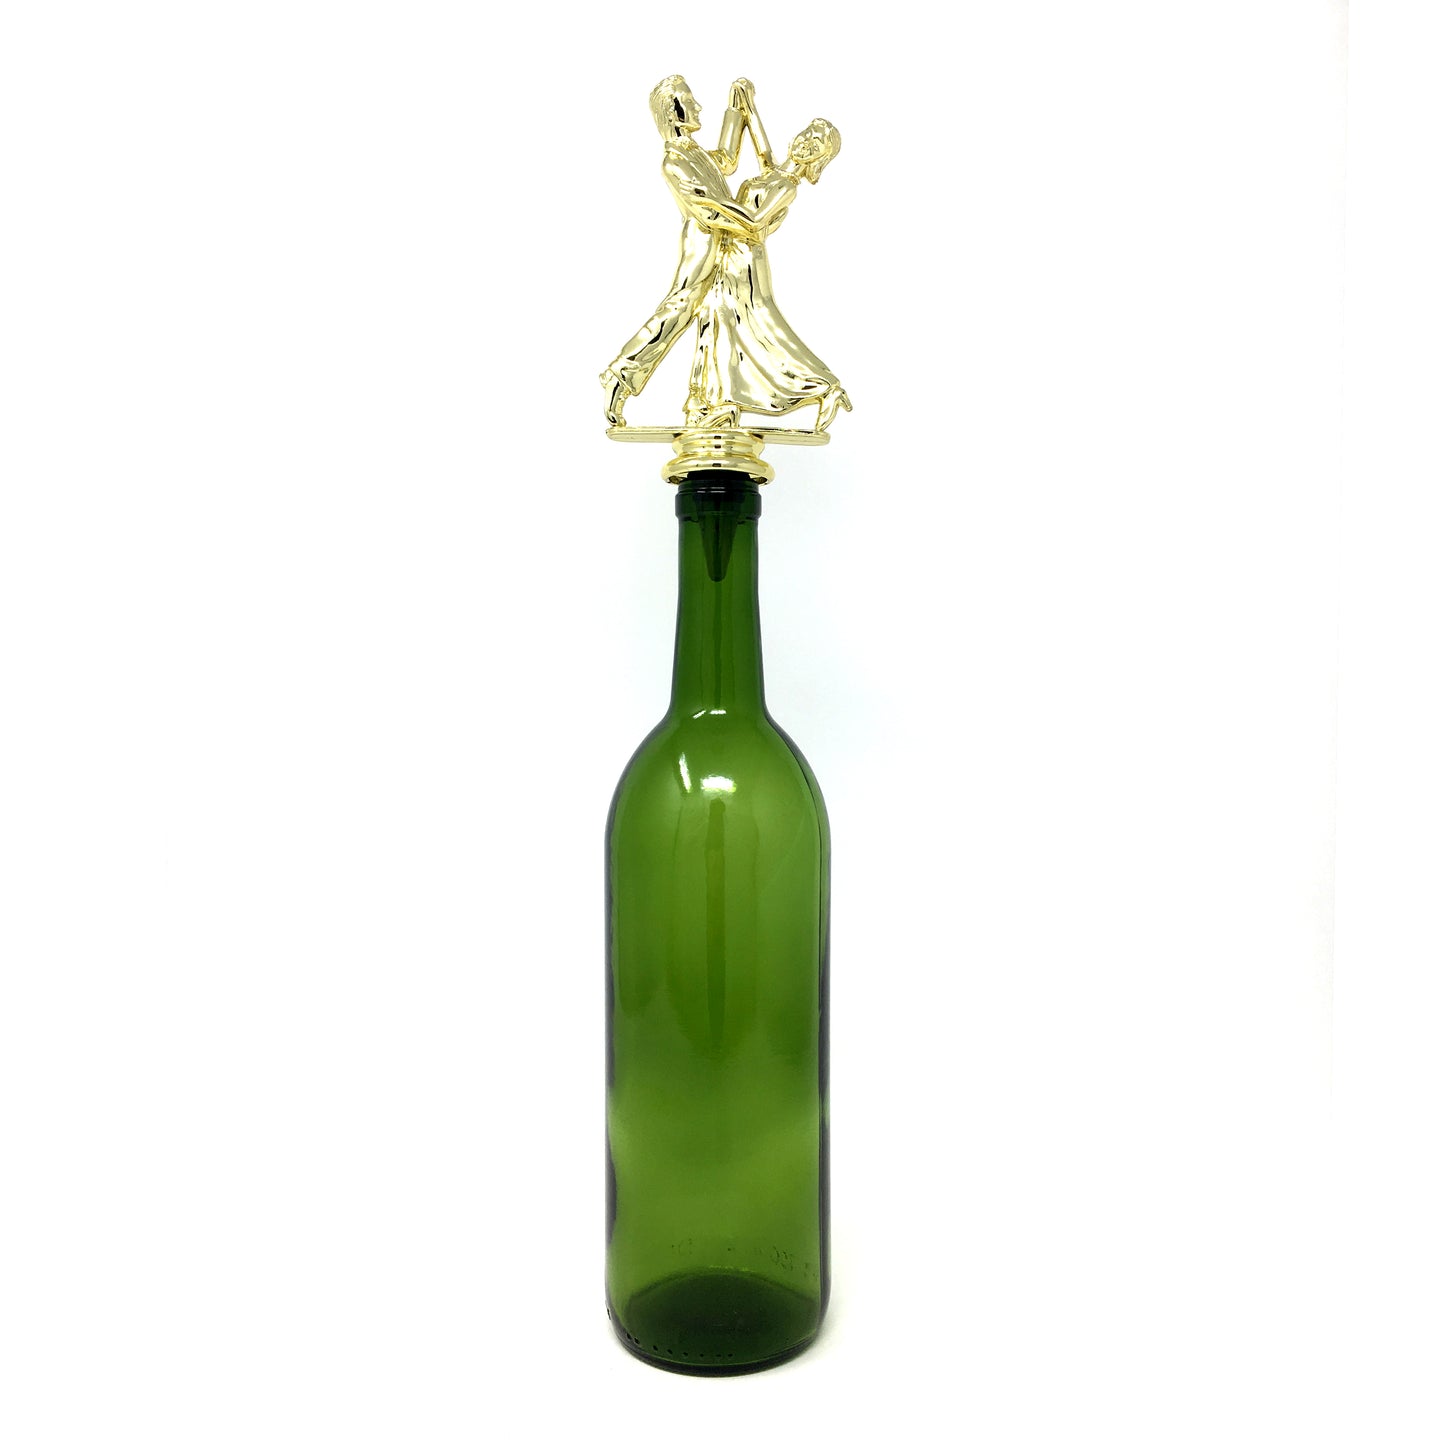 Ballroom Dance Trophy Wine Bottle Stopper with Stainless Steel Base